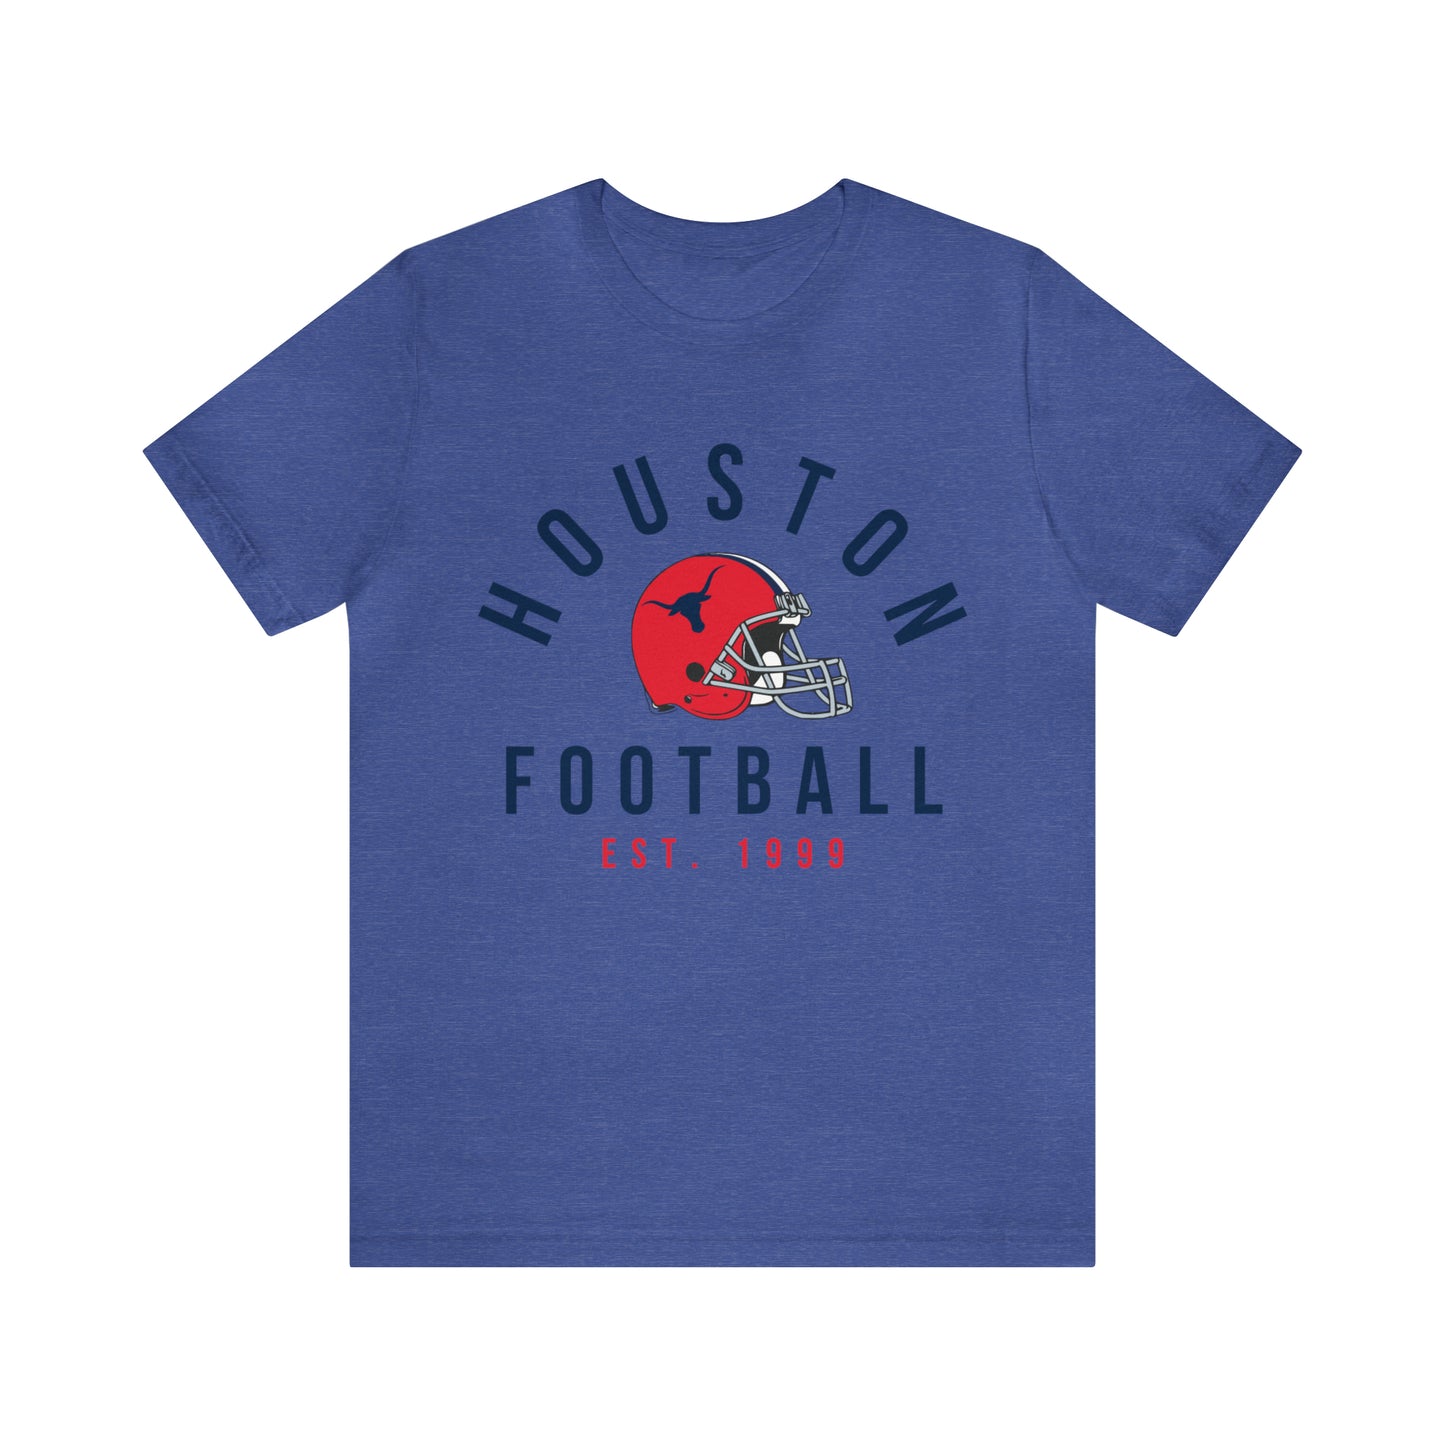 Vintage Houston Texans - Retro Houston Football Short Sleeve Shirt -  Men's Women's Kids Apparel - Design 1